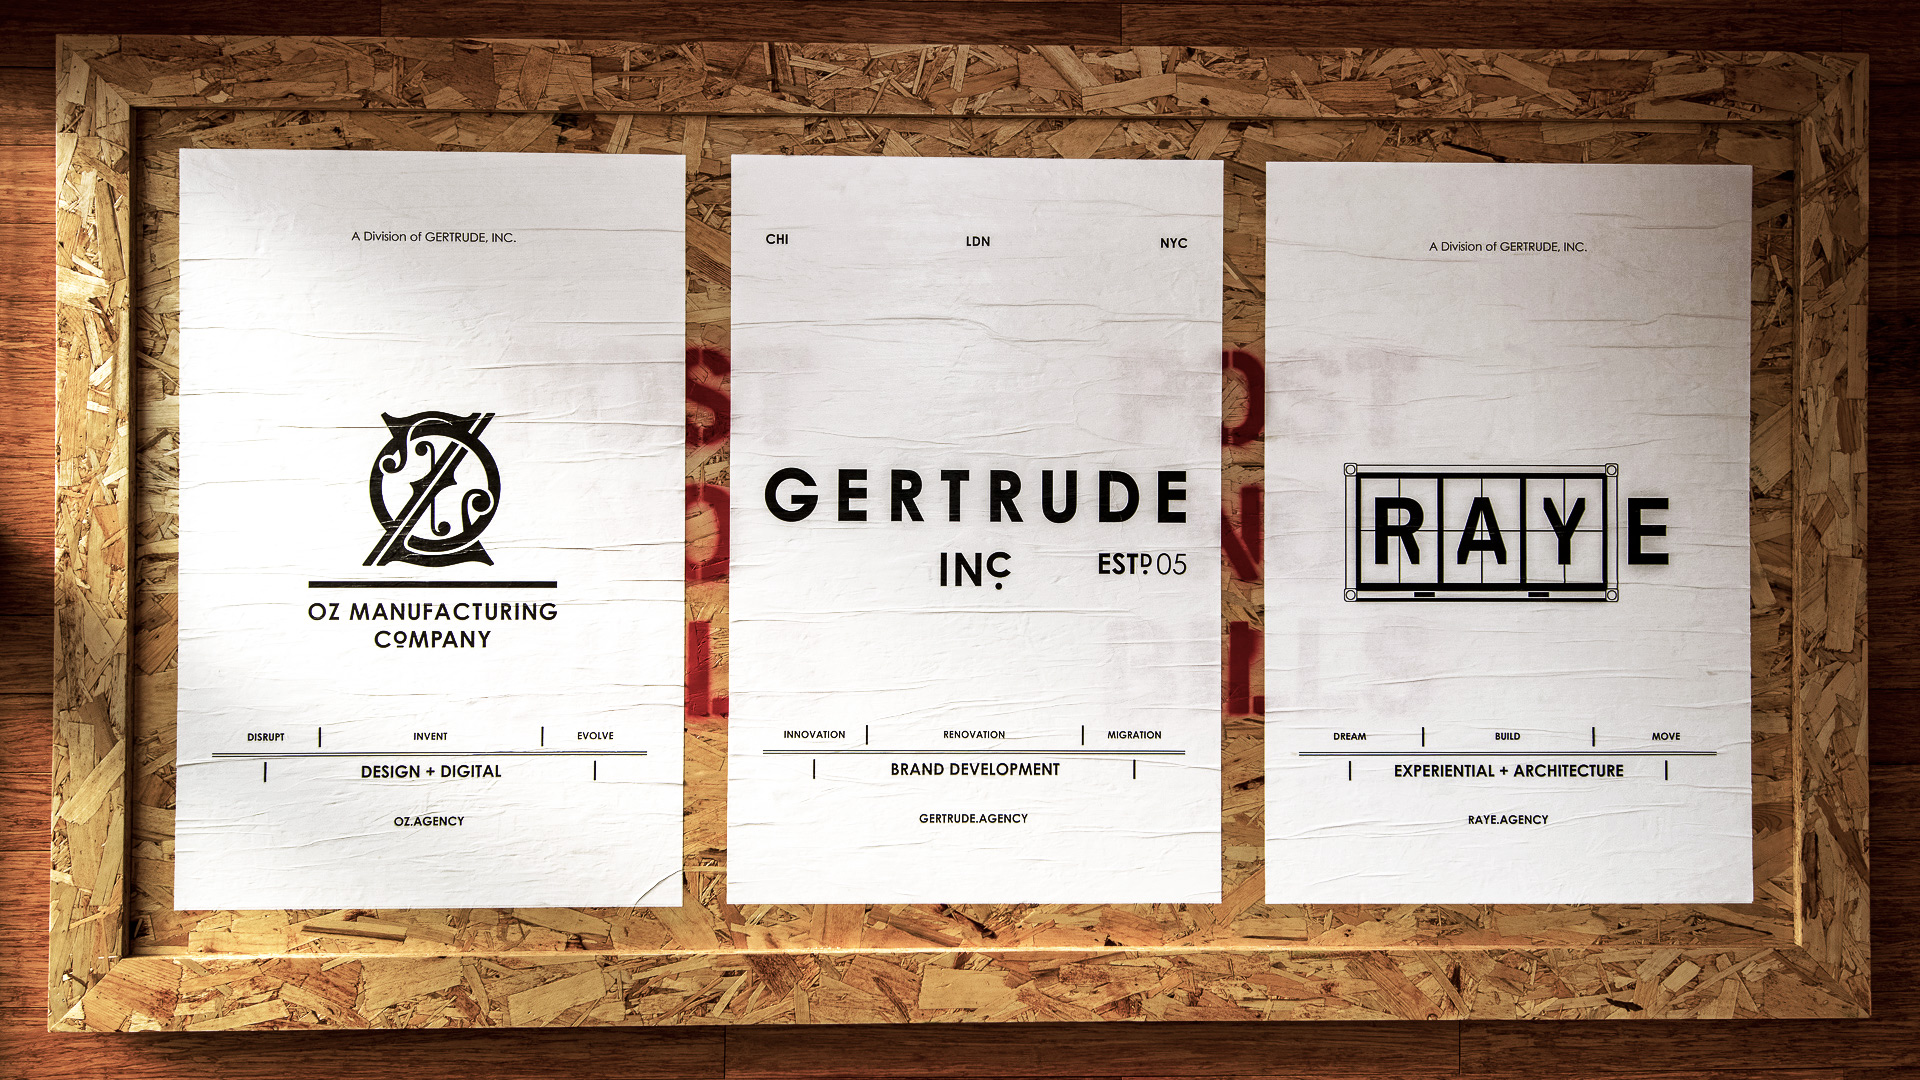 Gertrude, Inc. Oz Mfg. Company Raye Agency Office Branding Posters